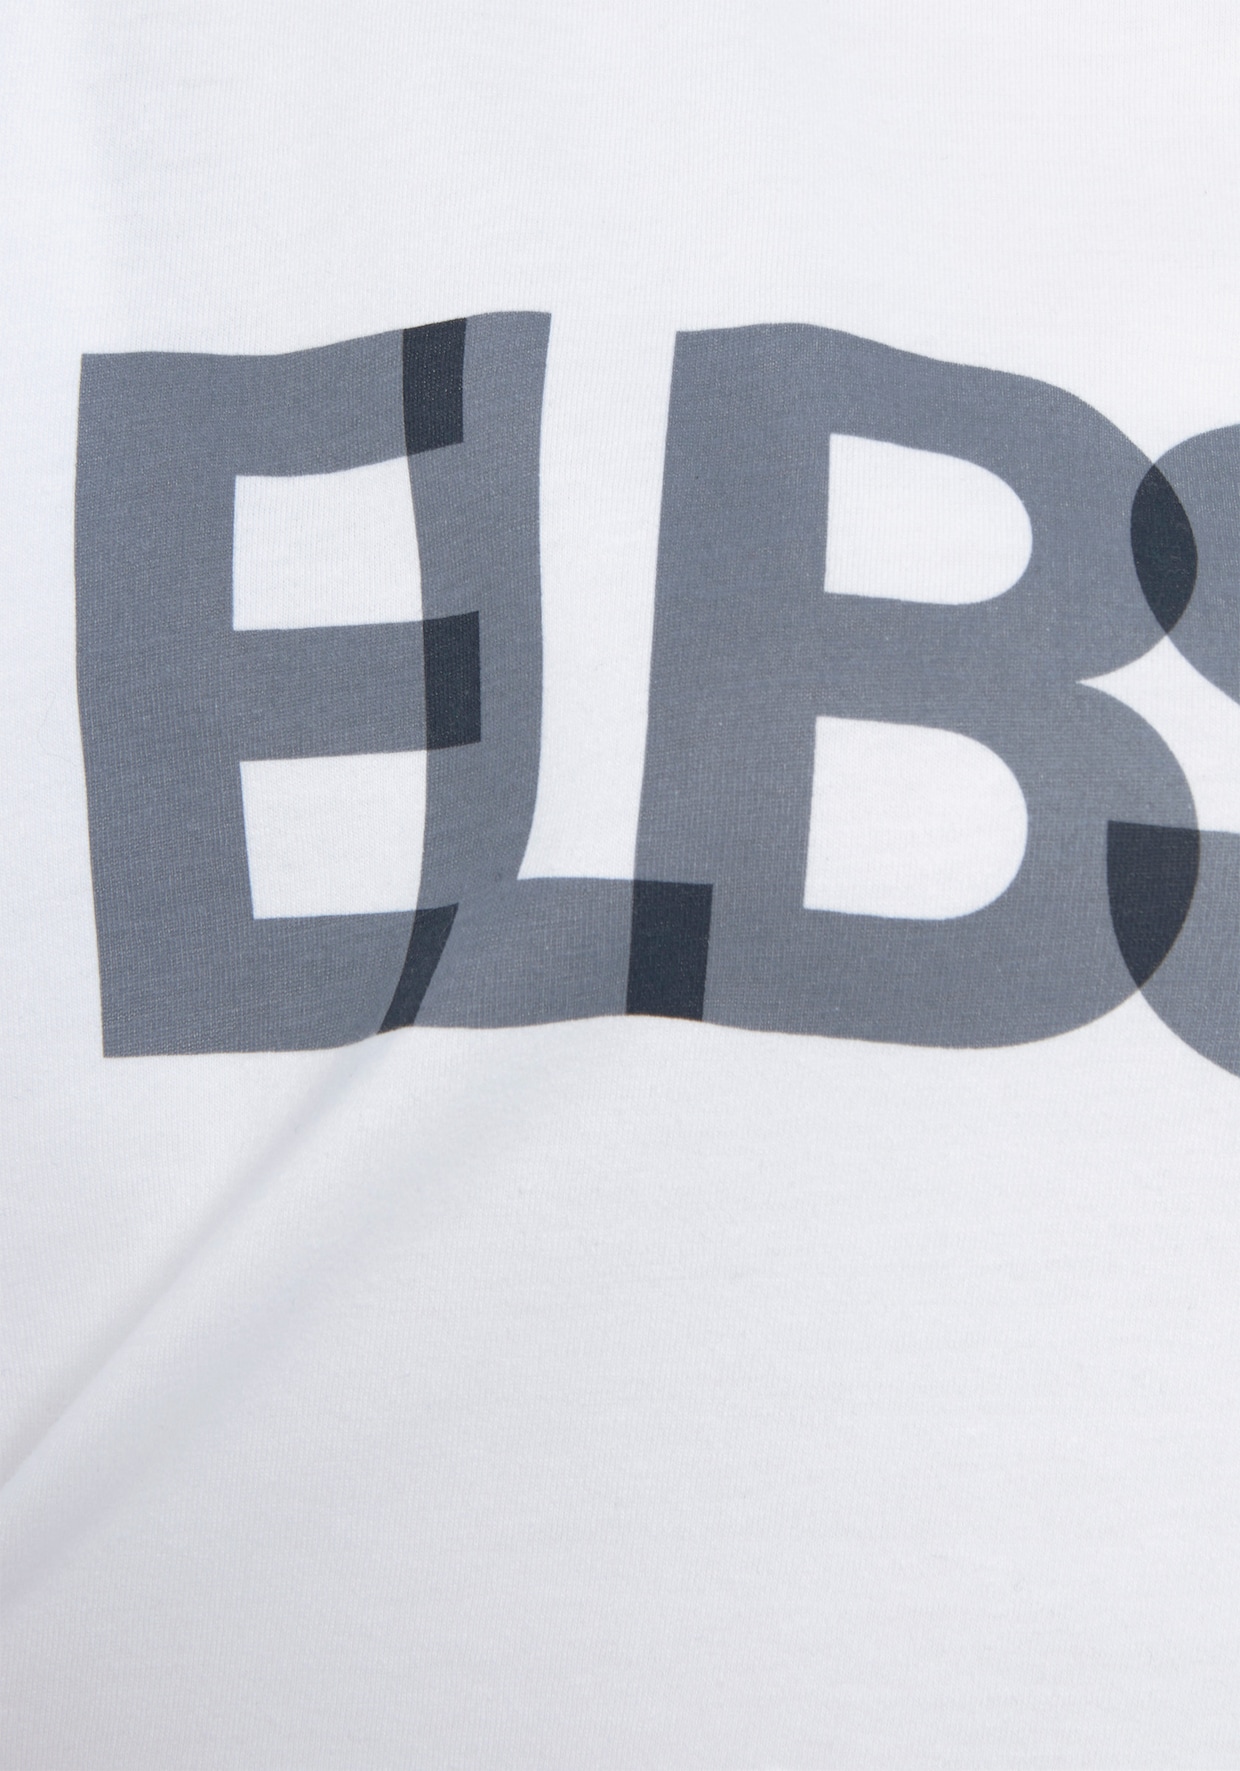 Elbsand 3/4-Arm-Shirt - bright white